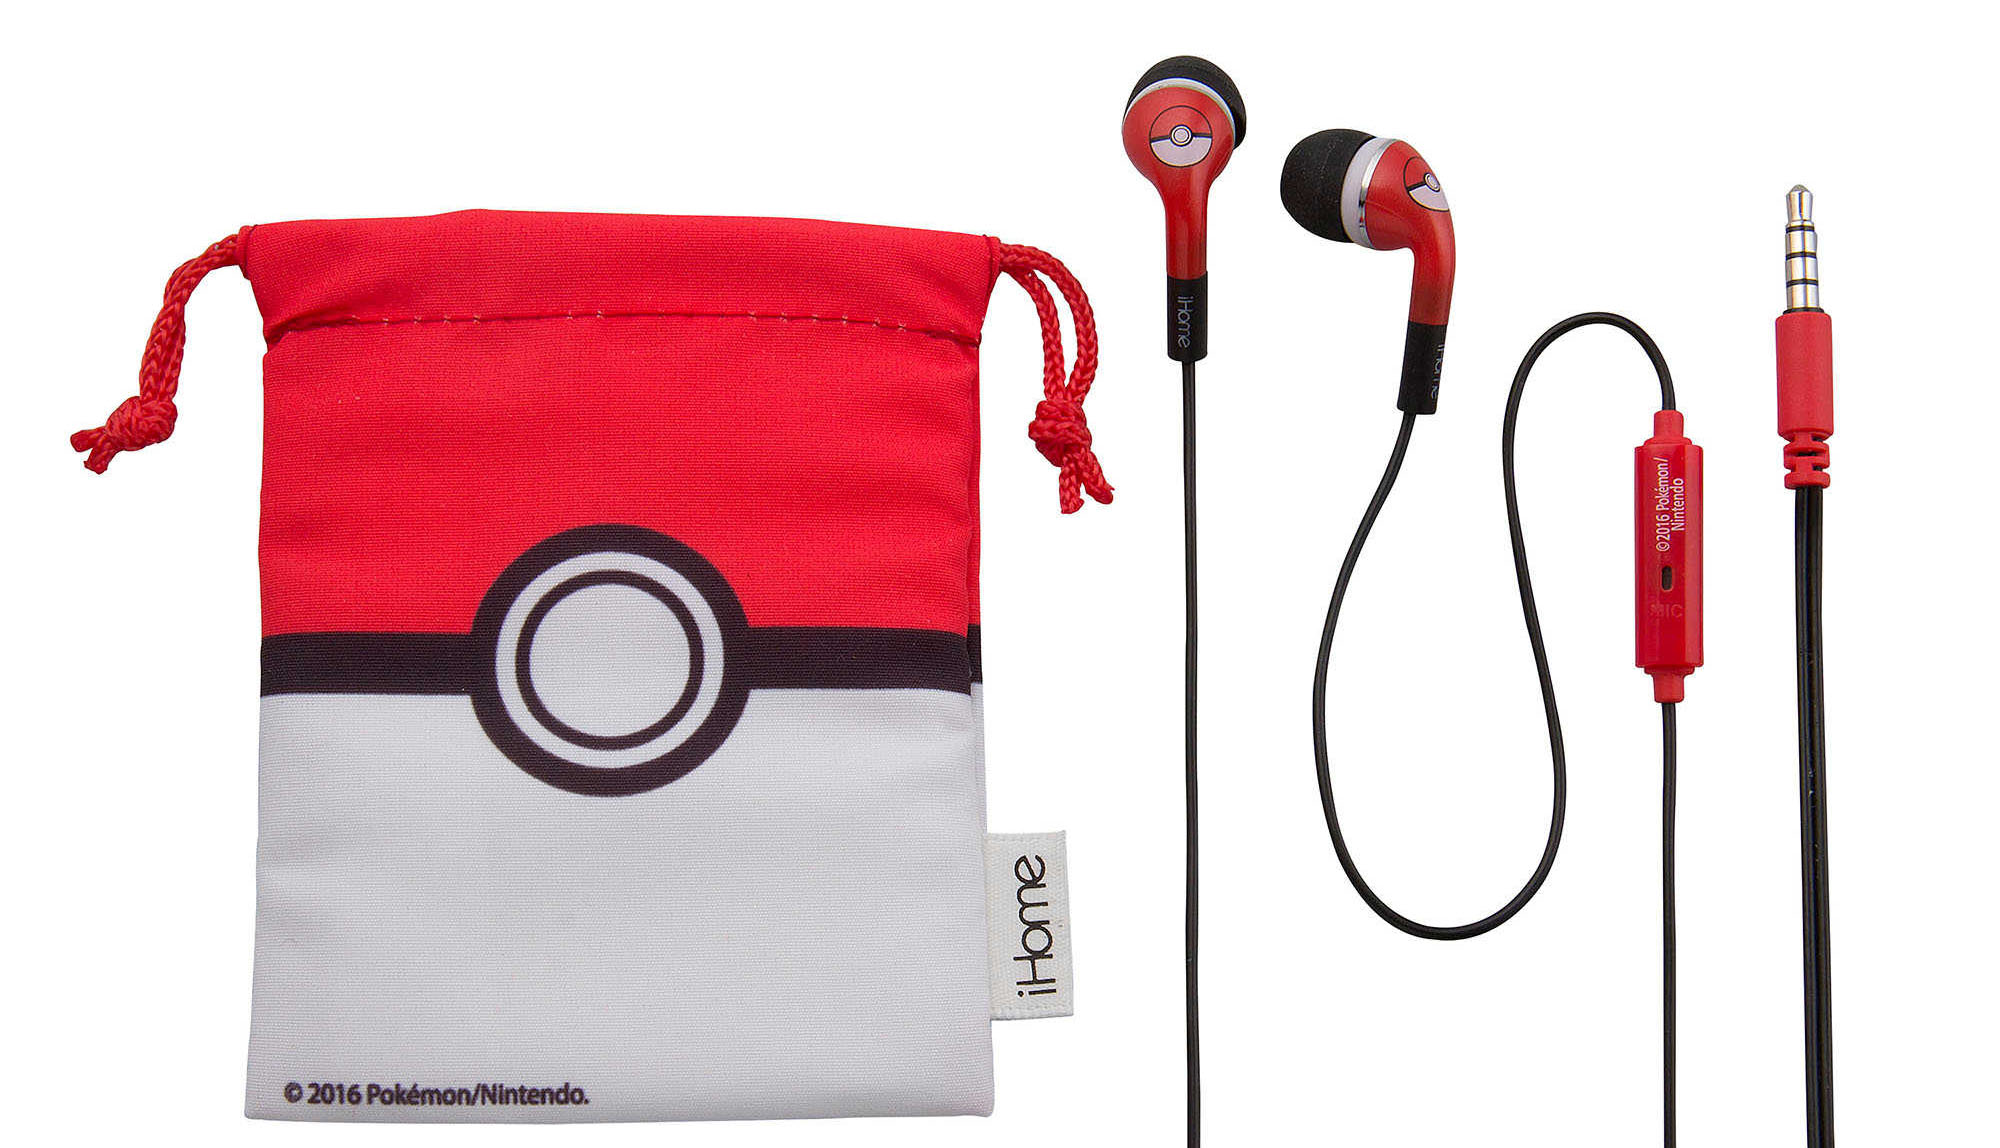 Pokémon iHome earbuds for $8